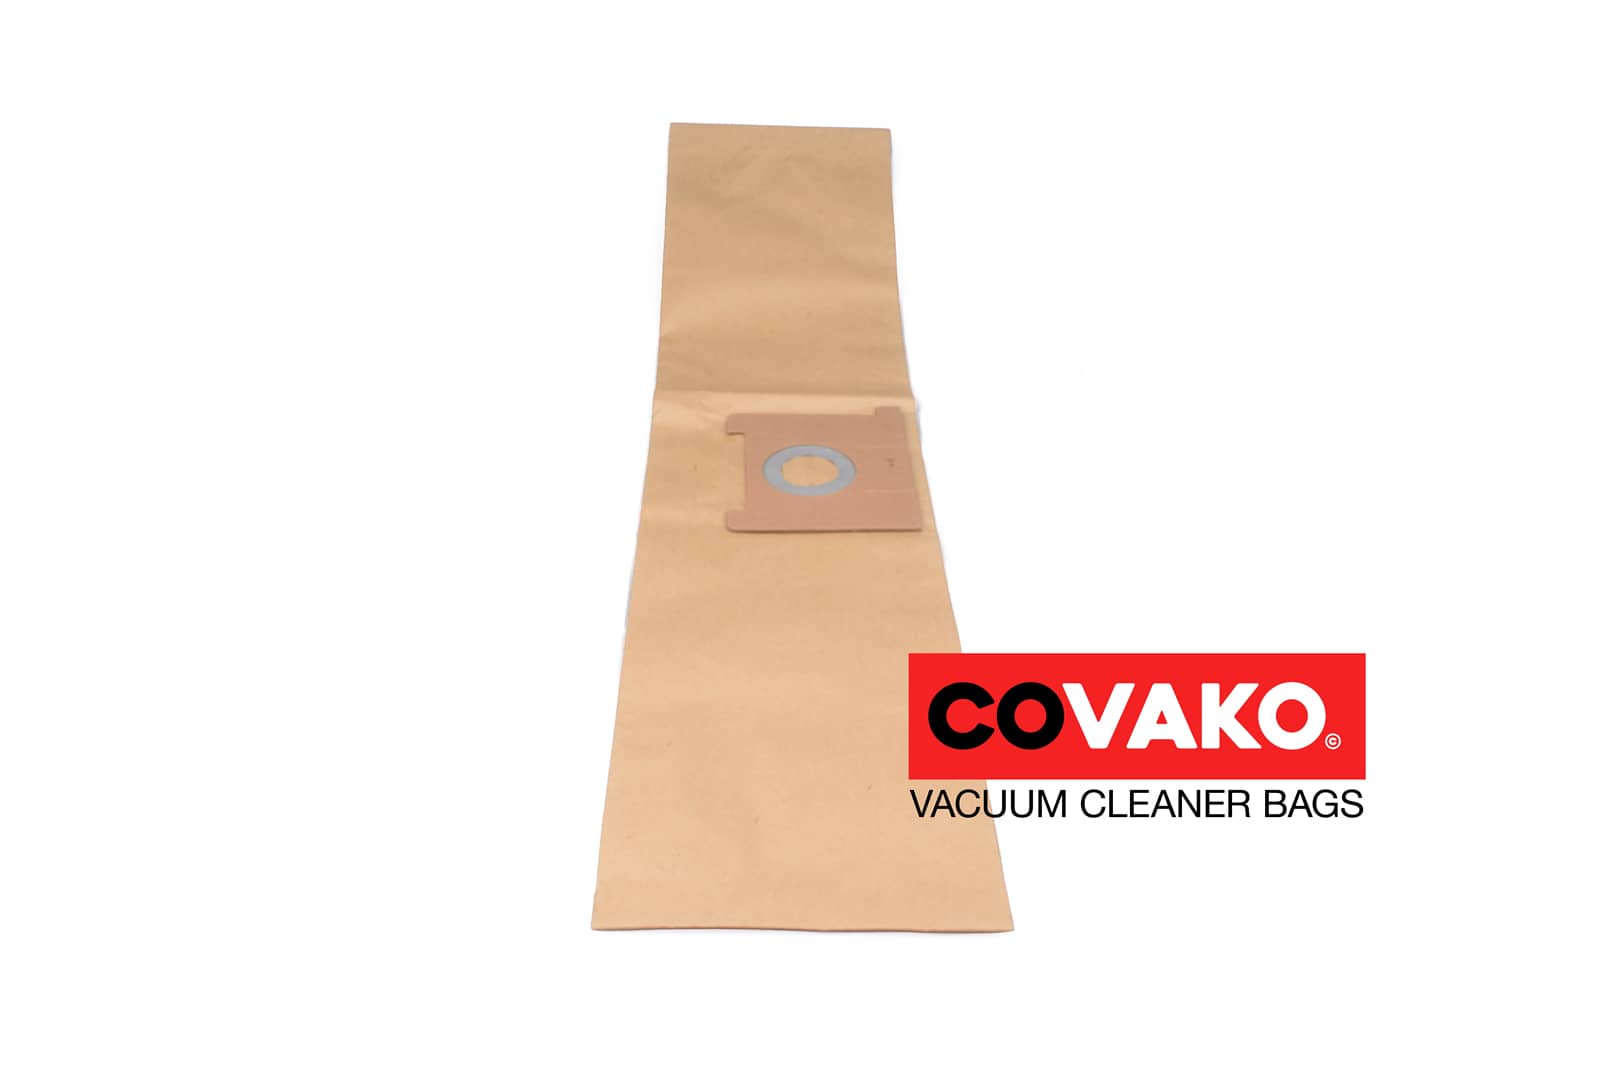 Fast C 09 / Paper - Fast vacuum cleaner bags